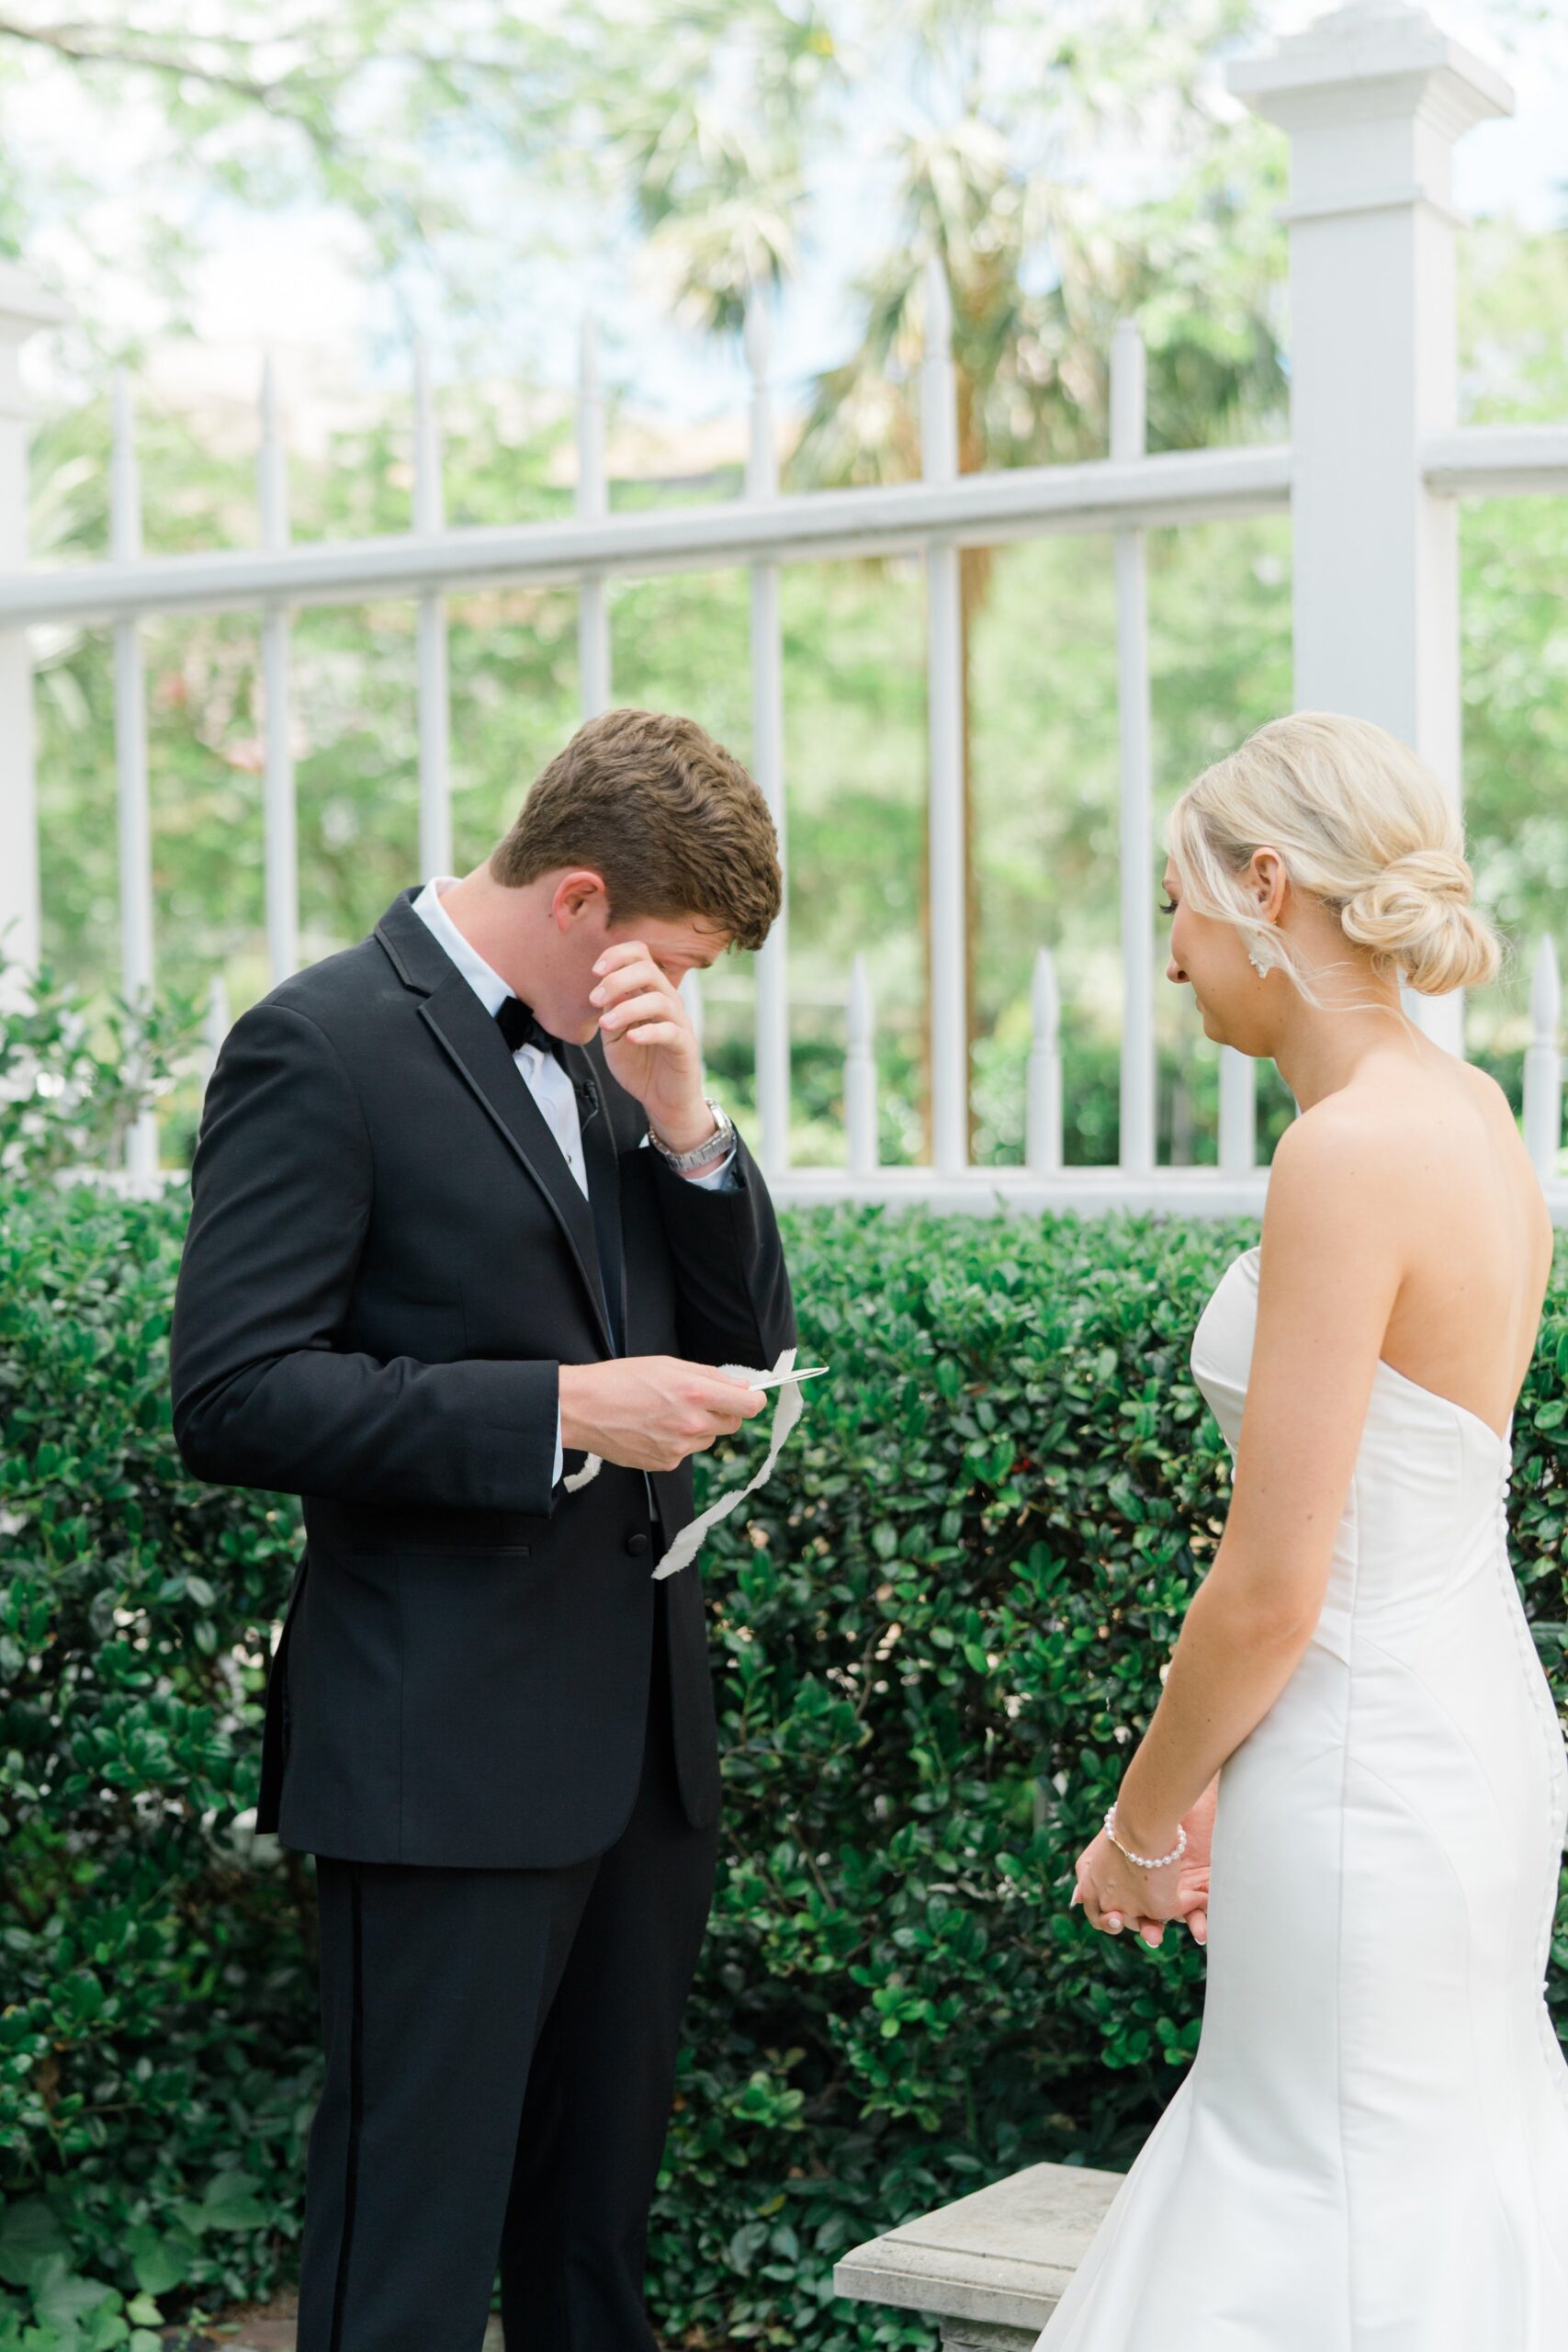 Emotional groom during private vows before spring Charleston wedding.